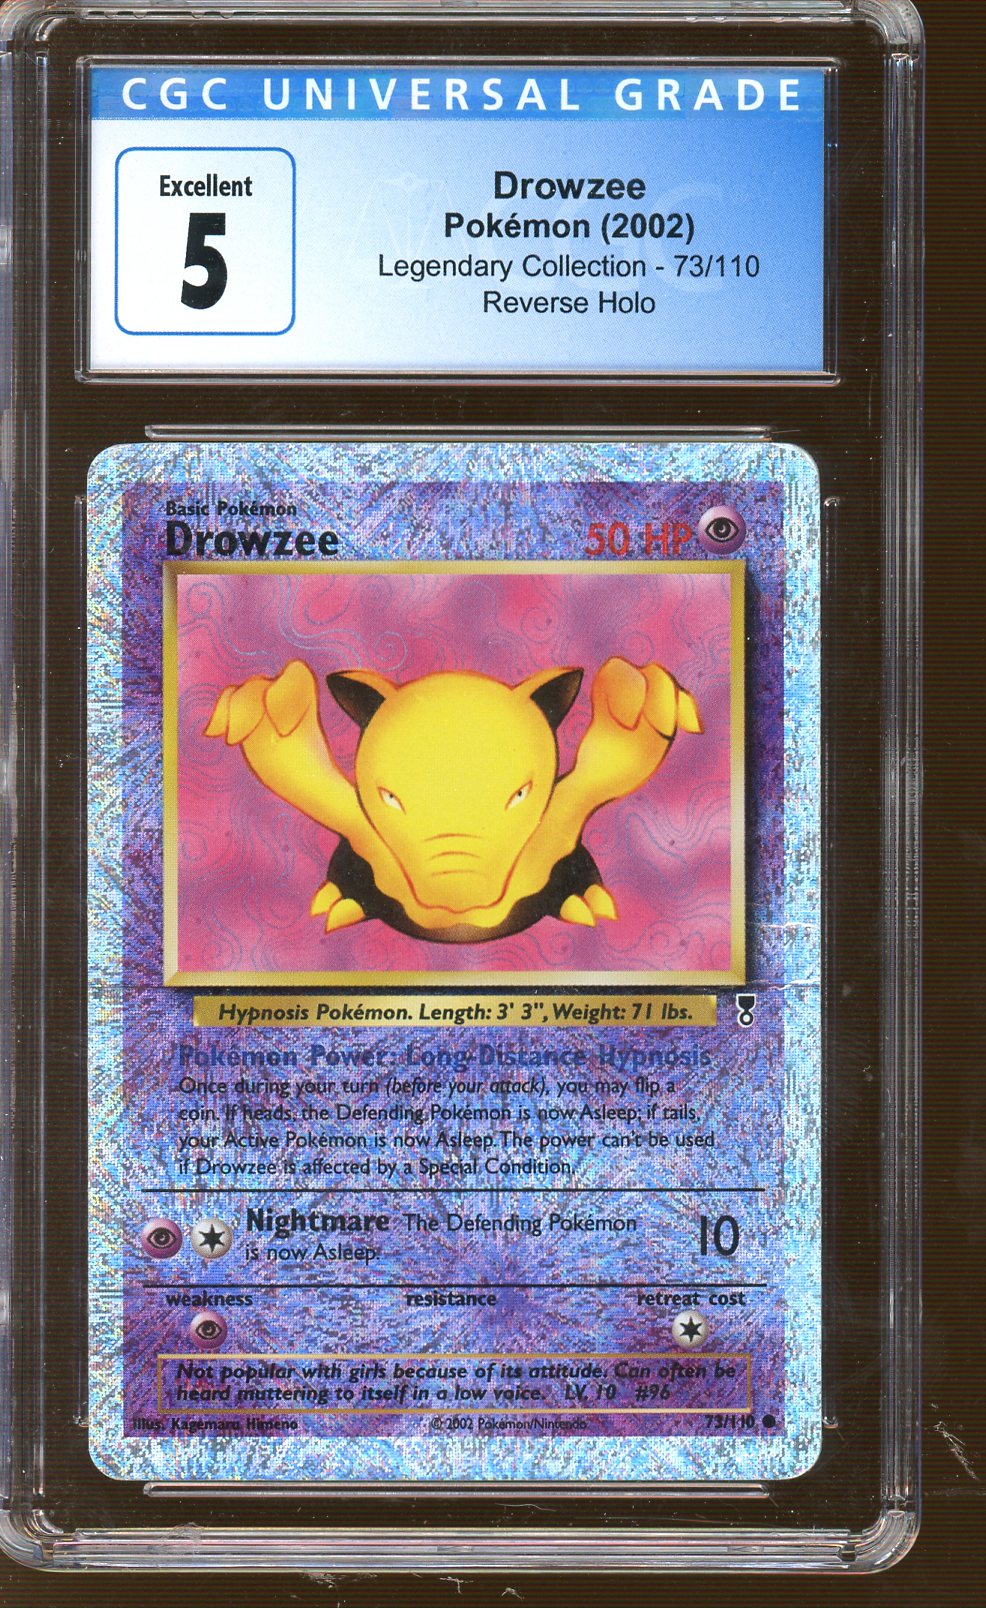 CGC Excellent 5 - 2002 Pokémon - Legendary Collection - Drowzee - Rev Holo